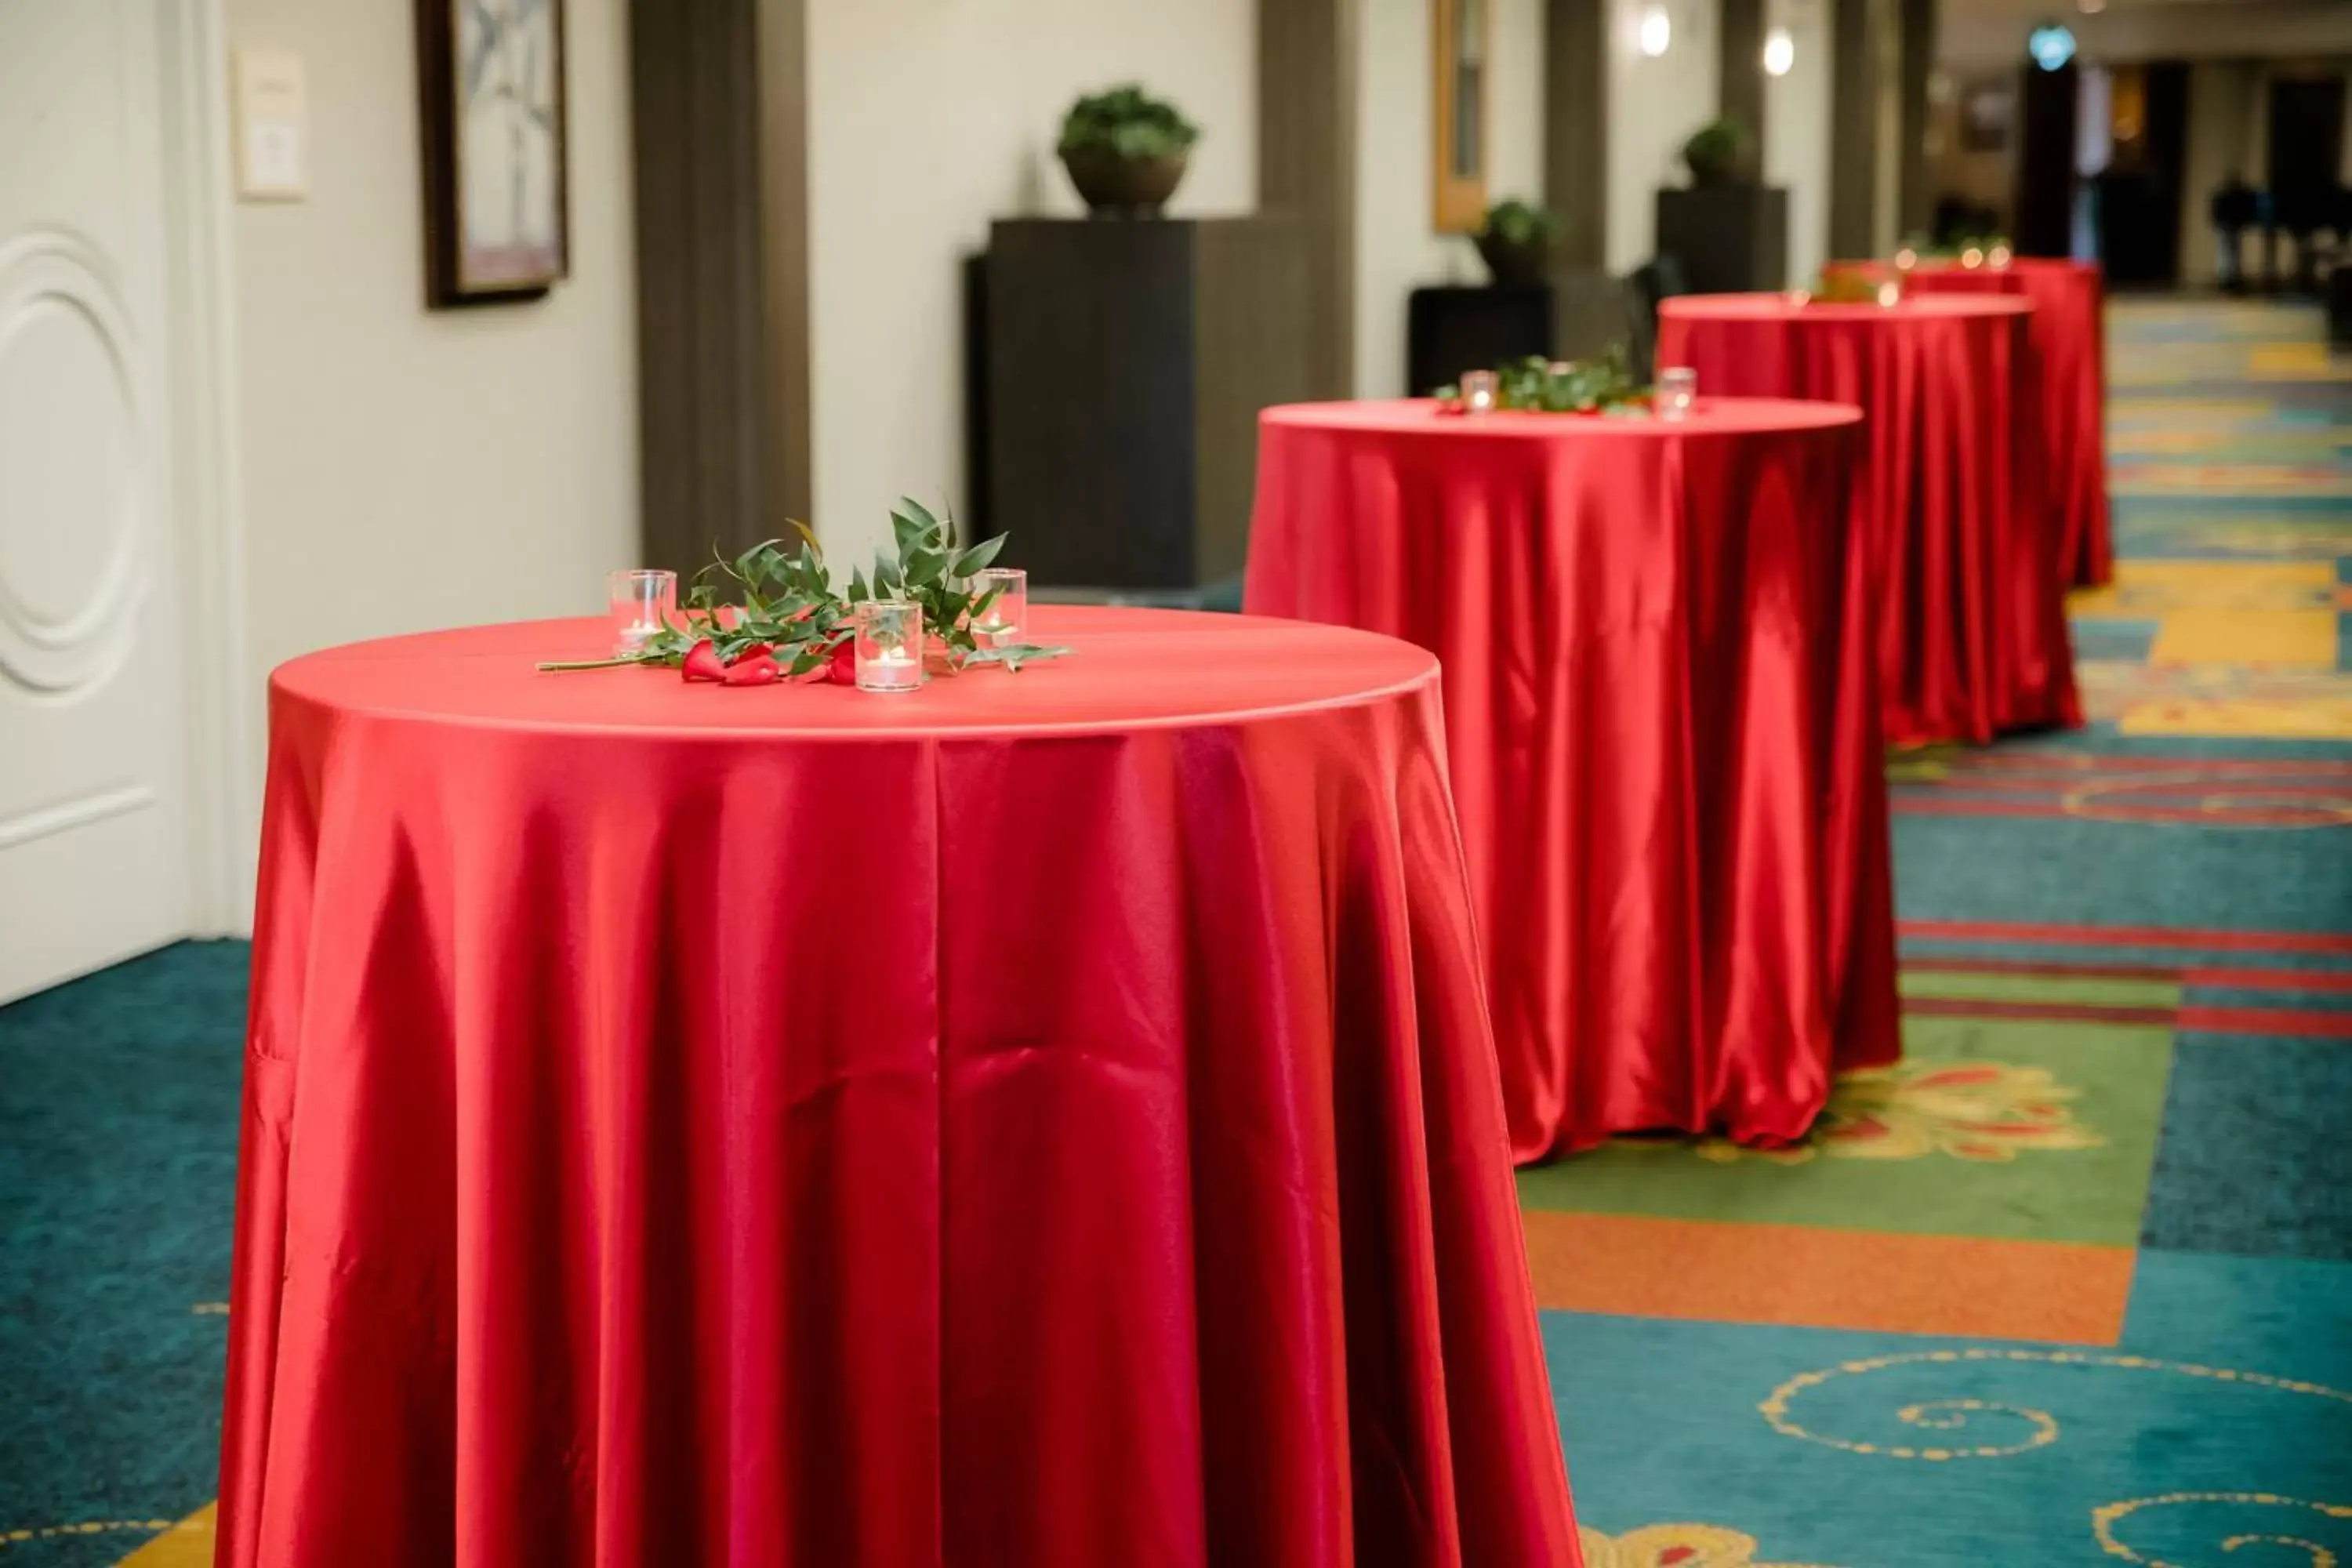 Meeting/conference room, Banquet Facilities in Anaheim Marriott Suites